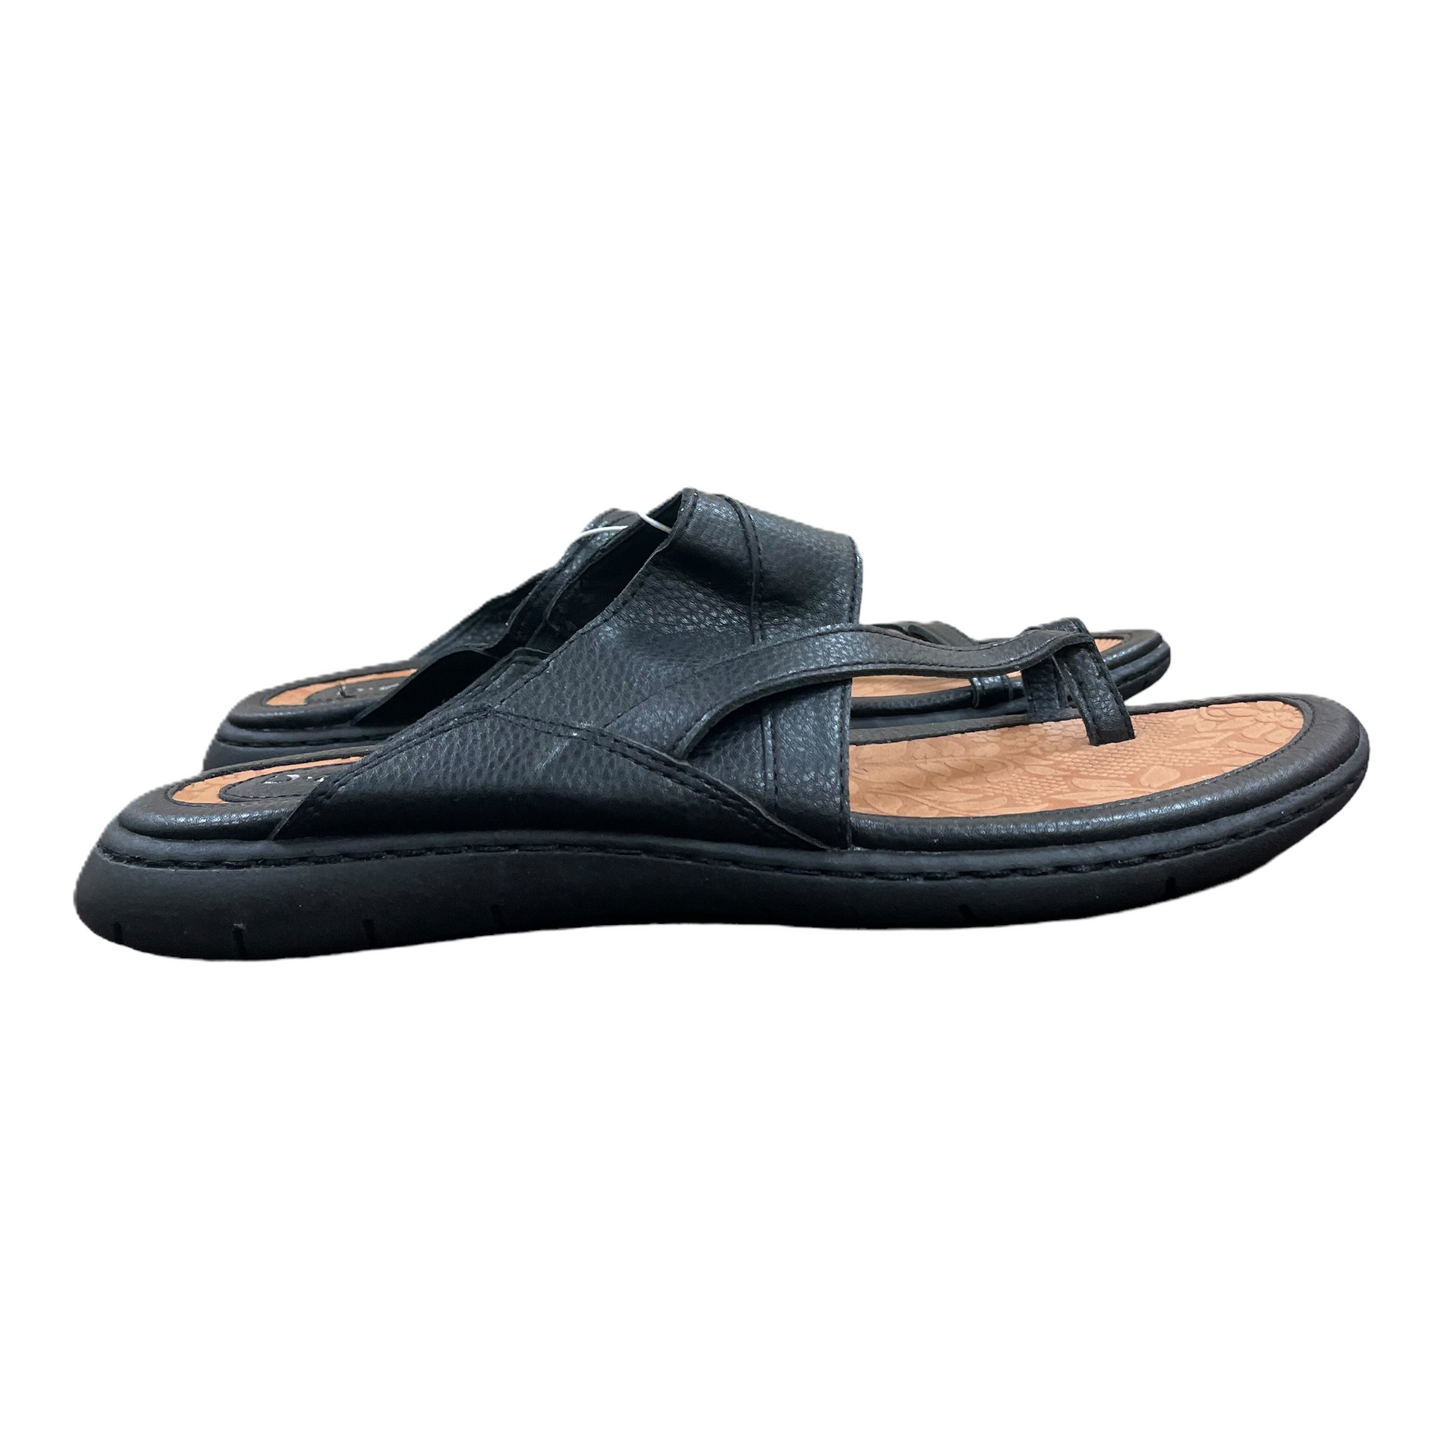 Black Sandals Flip Flops By Boc, Size: 11